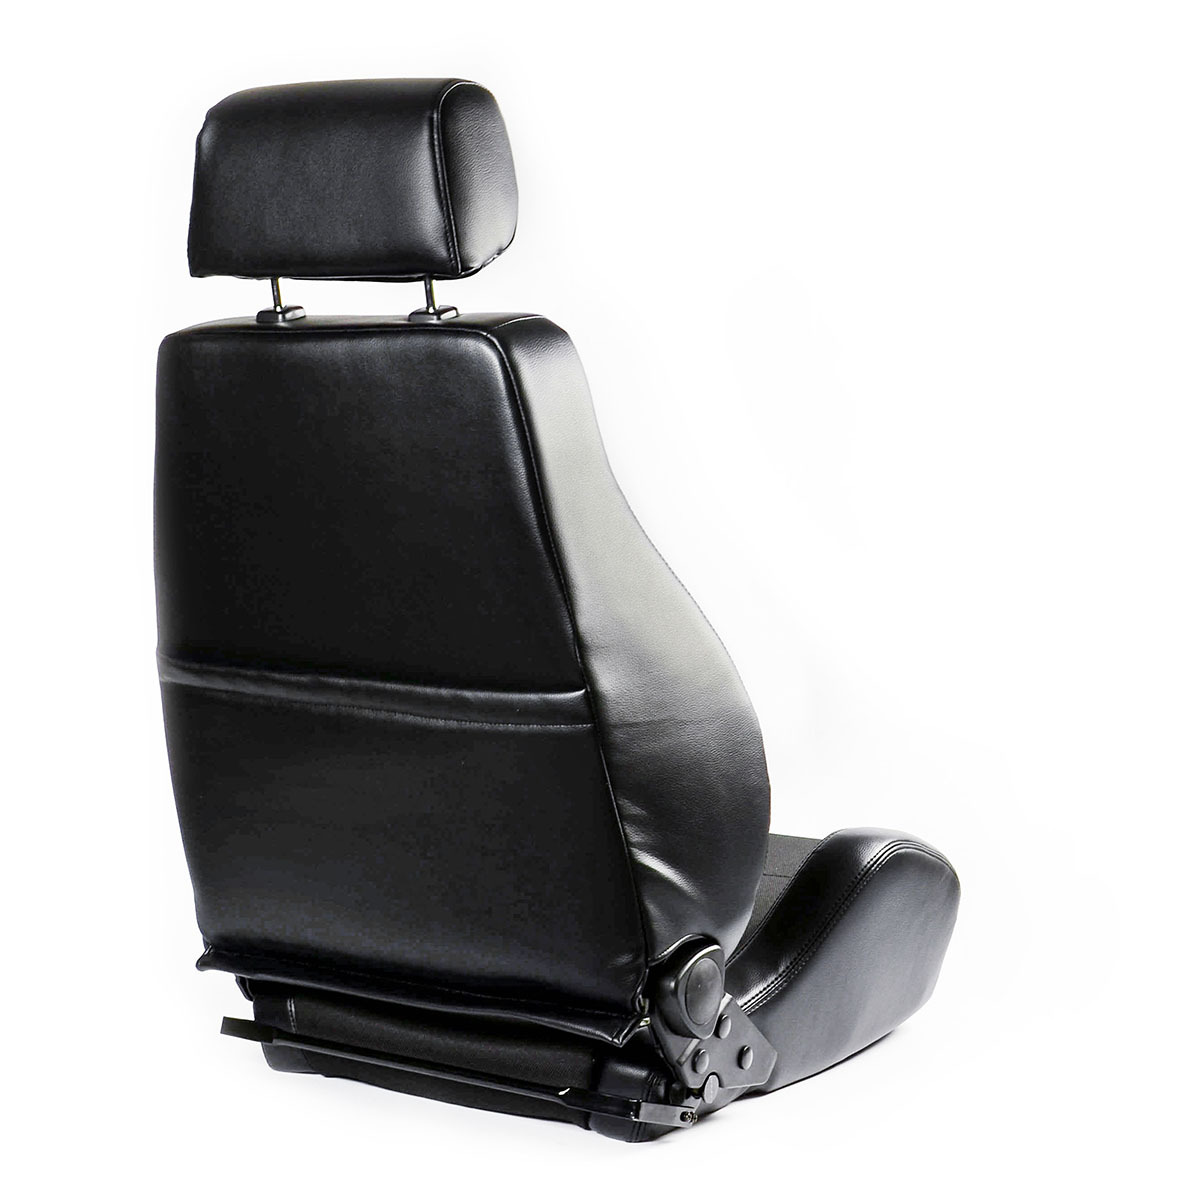 SAAS 4x4 Sports Seat Black Cloth / PU ADR Compliant